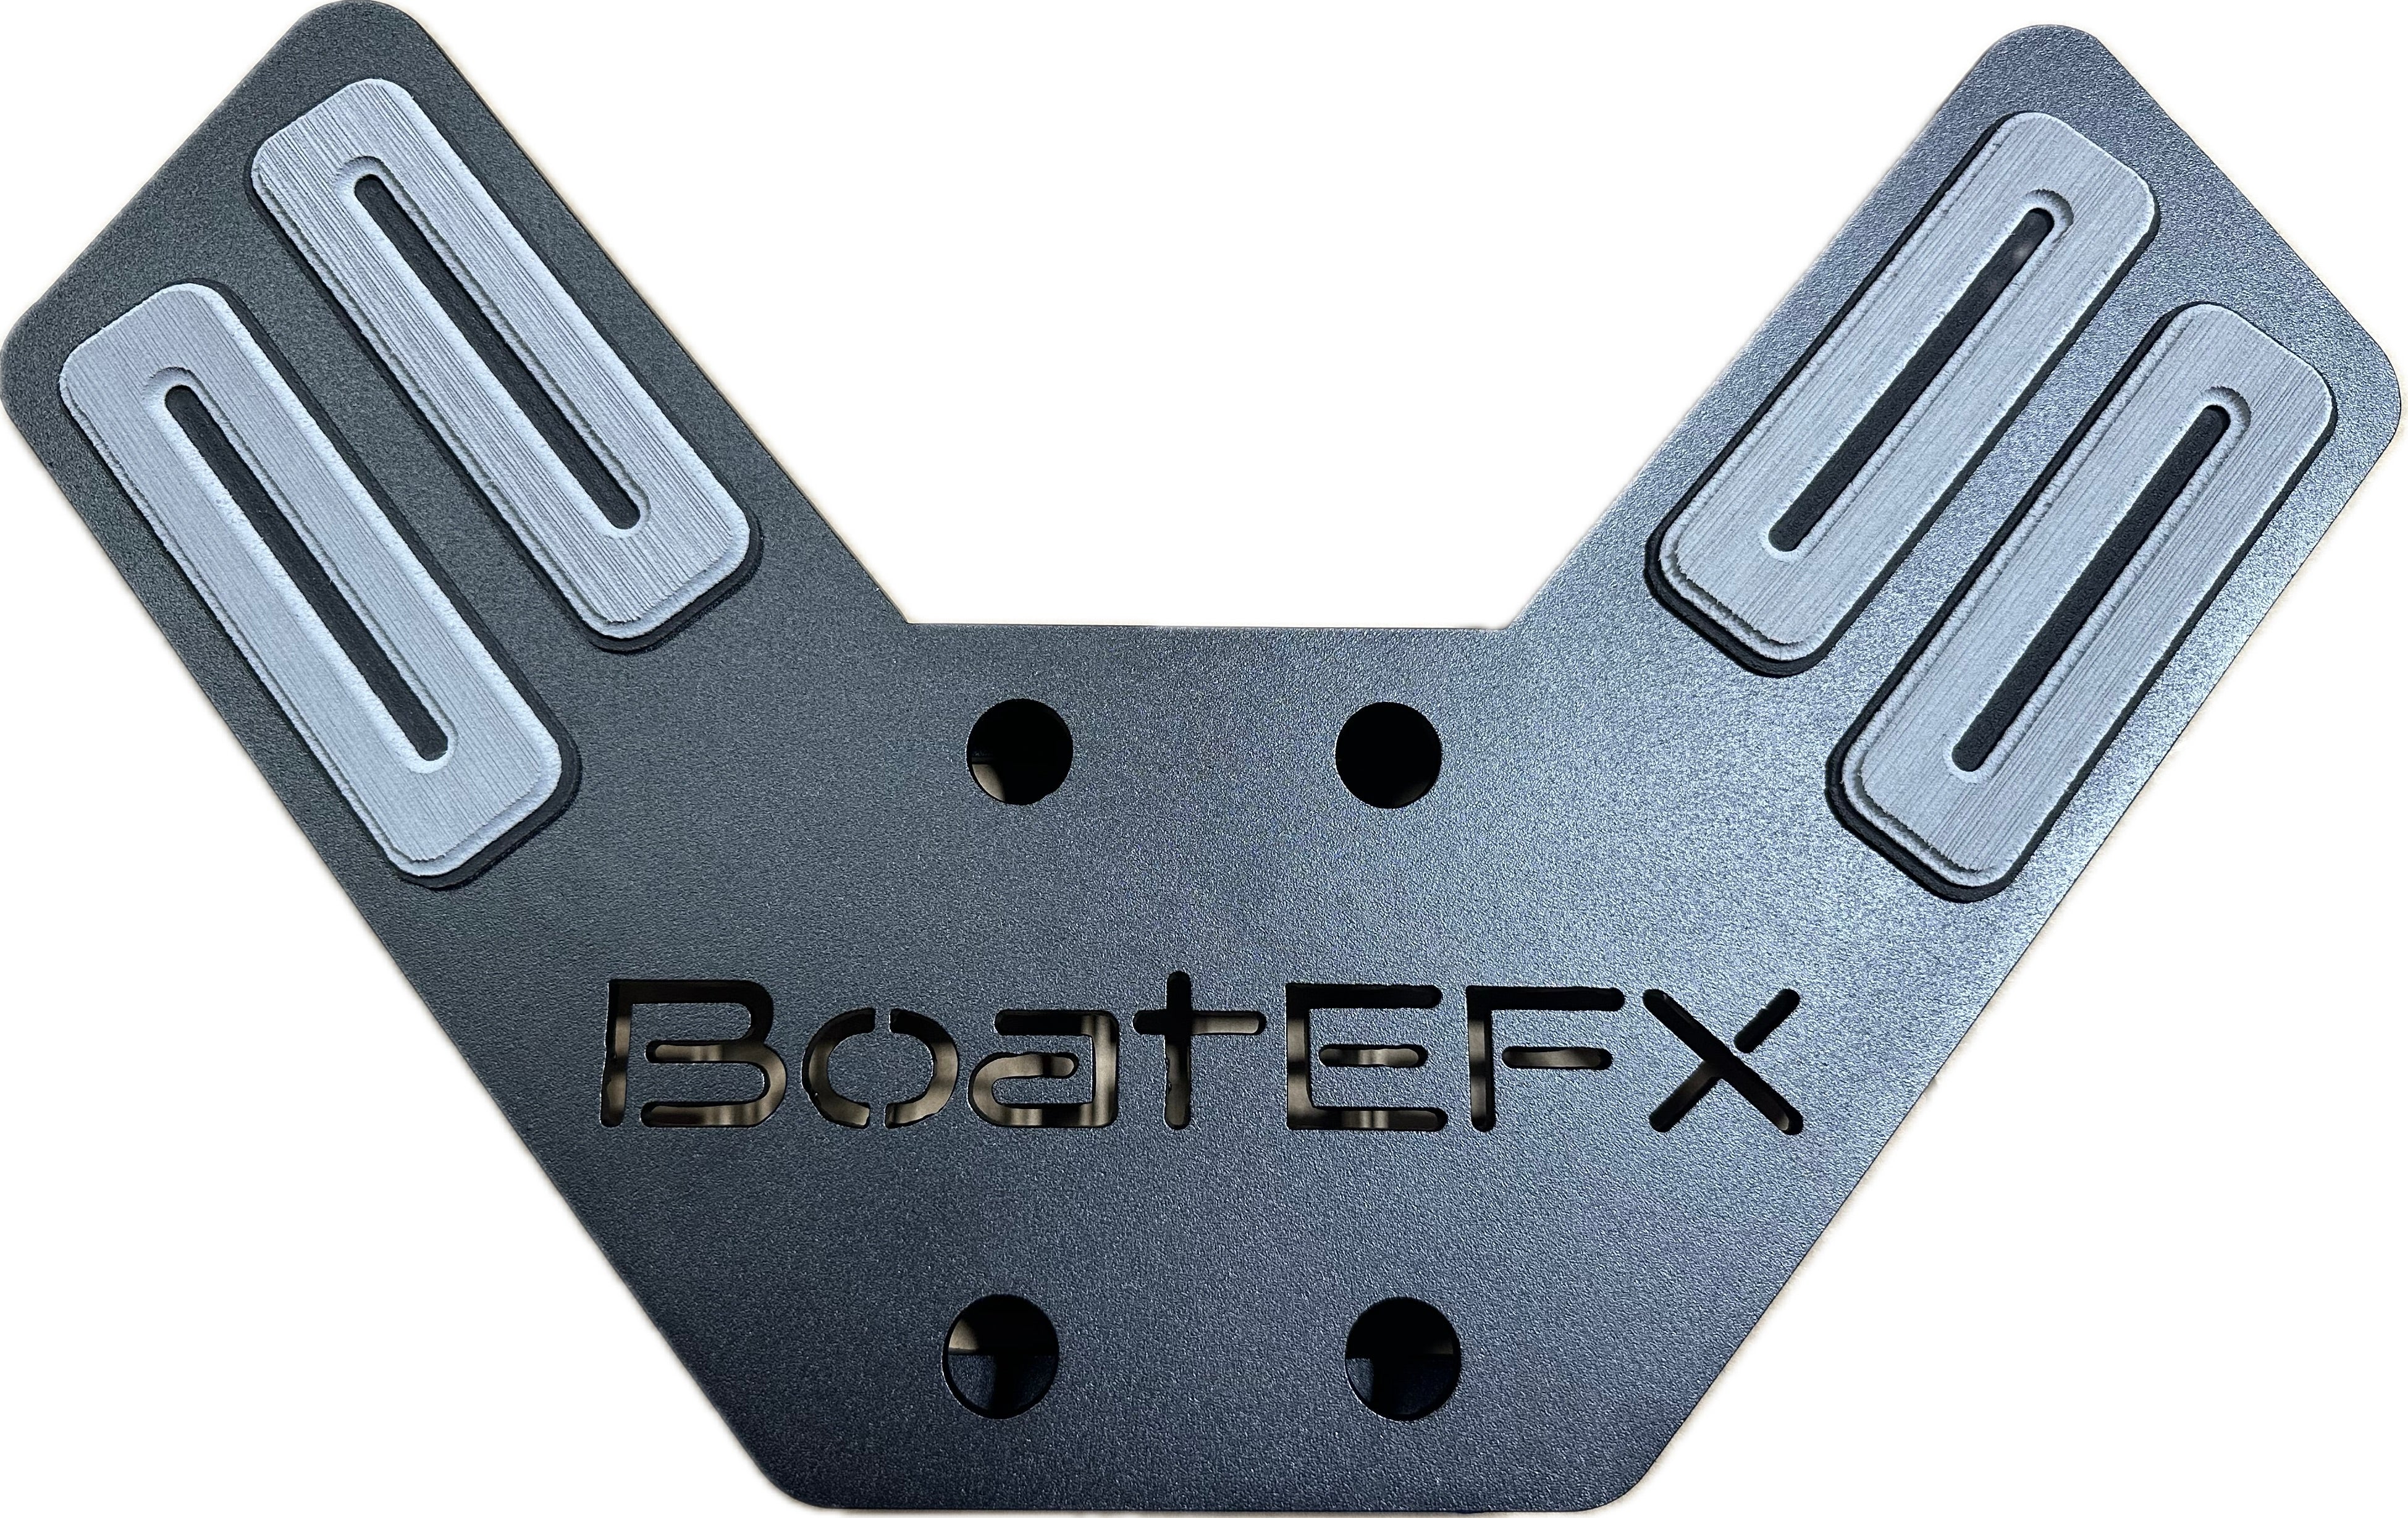 Booma Trailer Step, BoatEFX